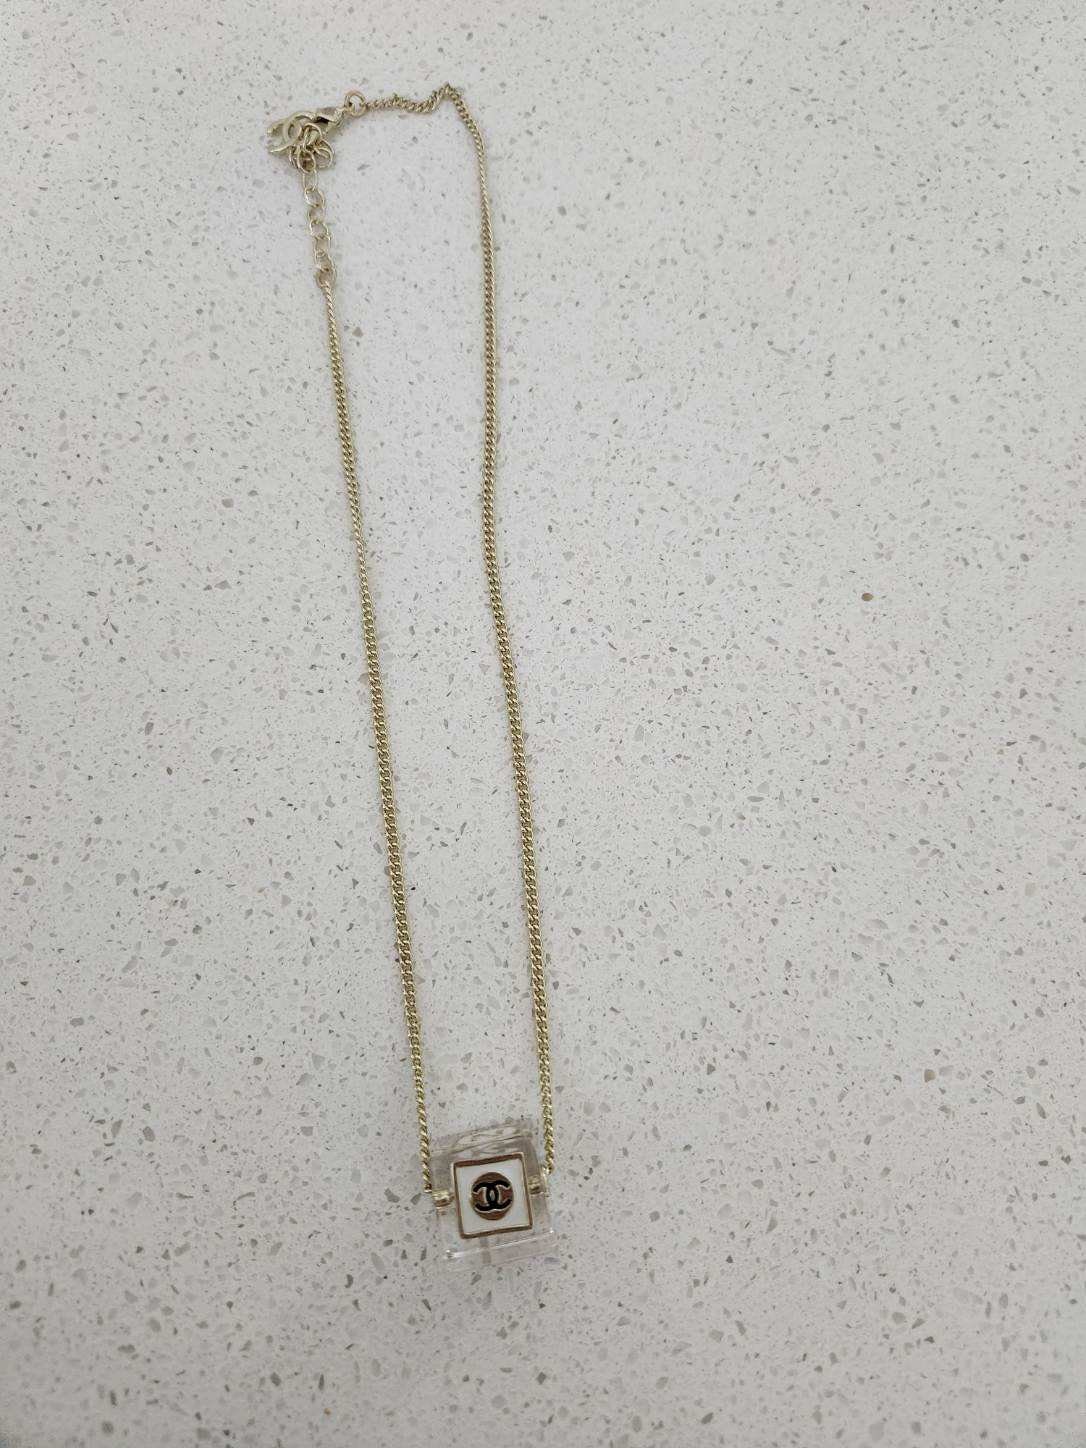 kabala talisman necklace jewels pendant hebrew amulet kabbalah goetia  solomon 1